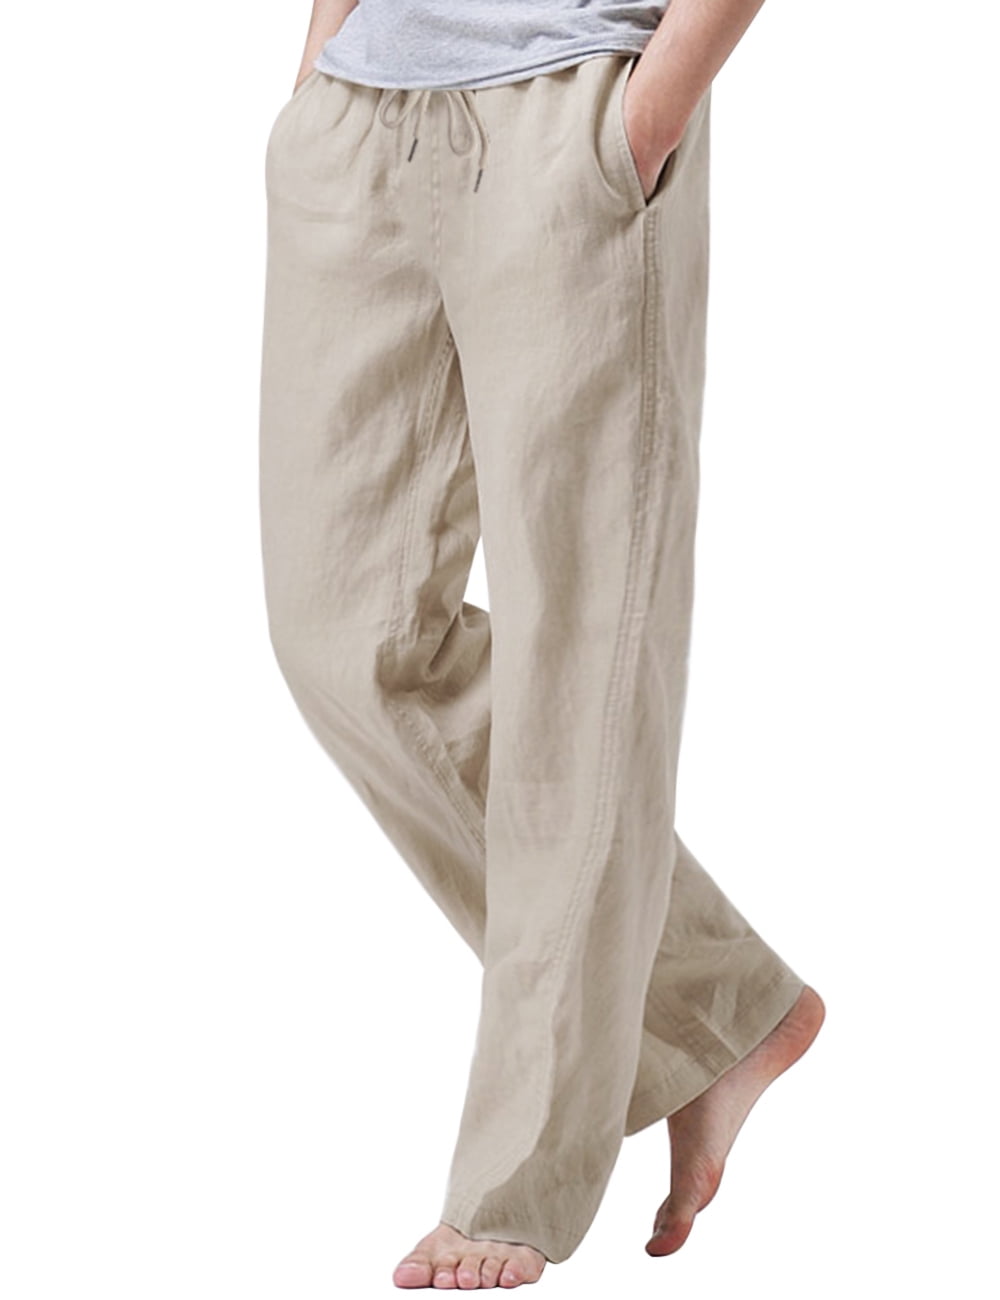 ZHENWEI Mens Cotton Linen Drawstring Pants Elastic Waist Casual